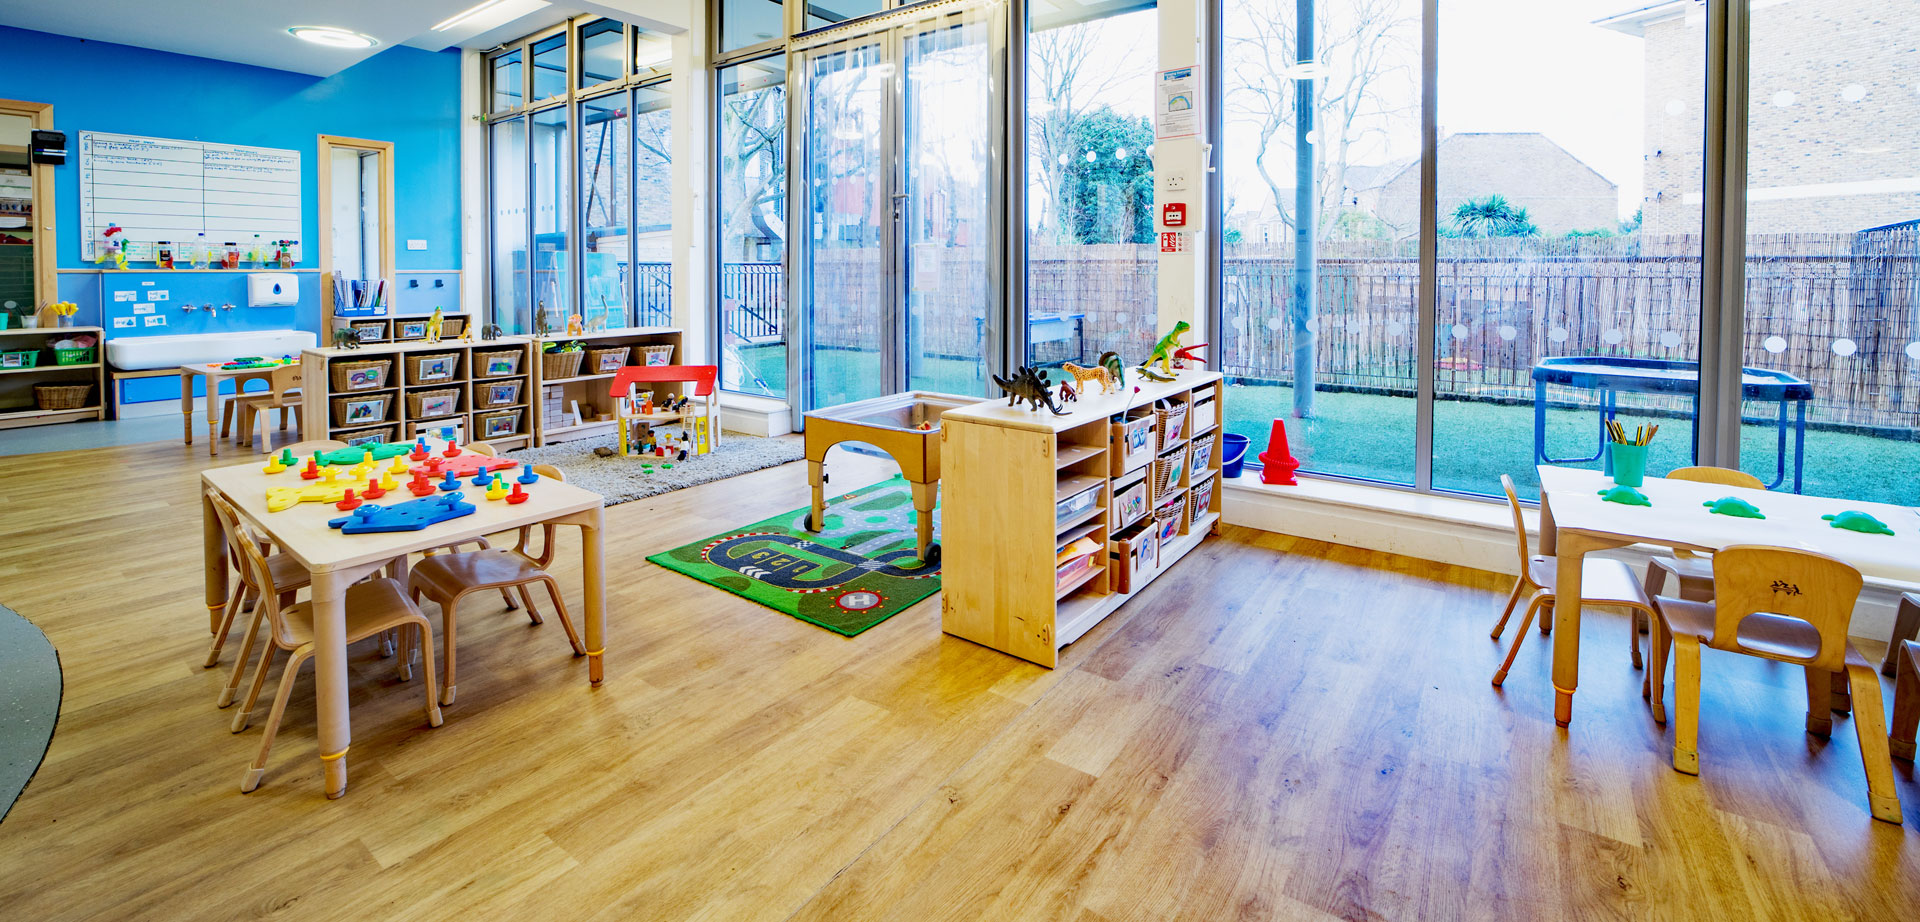 Barnes Day Nursery and Preschool